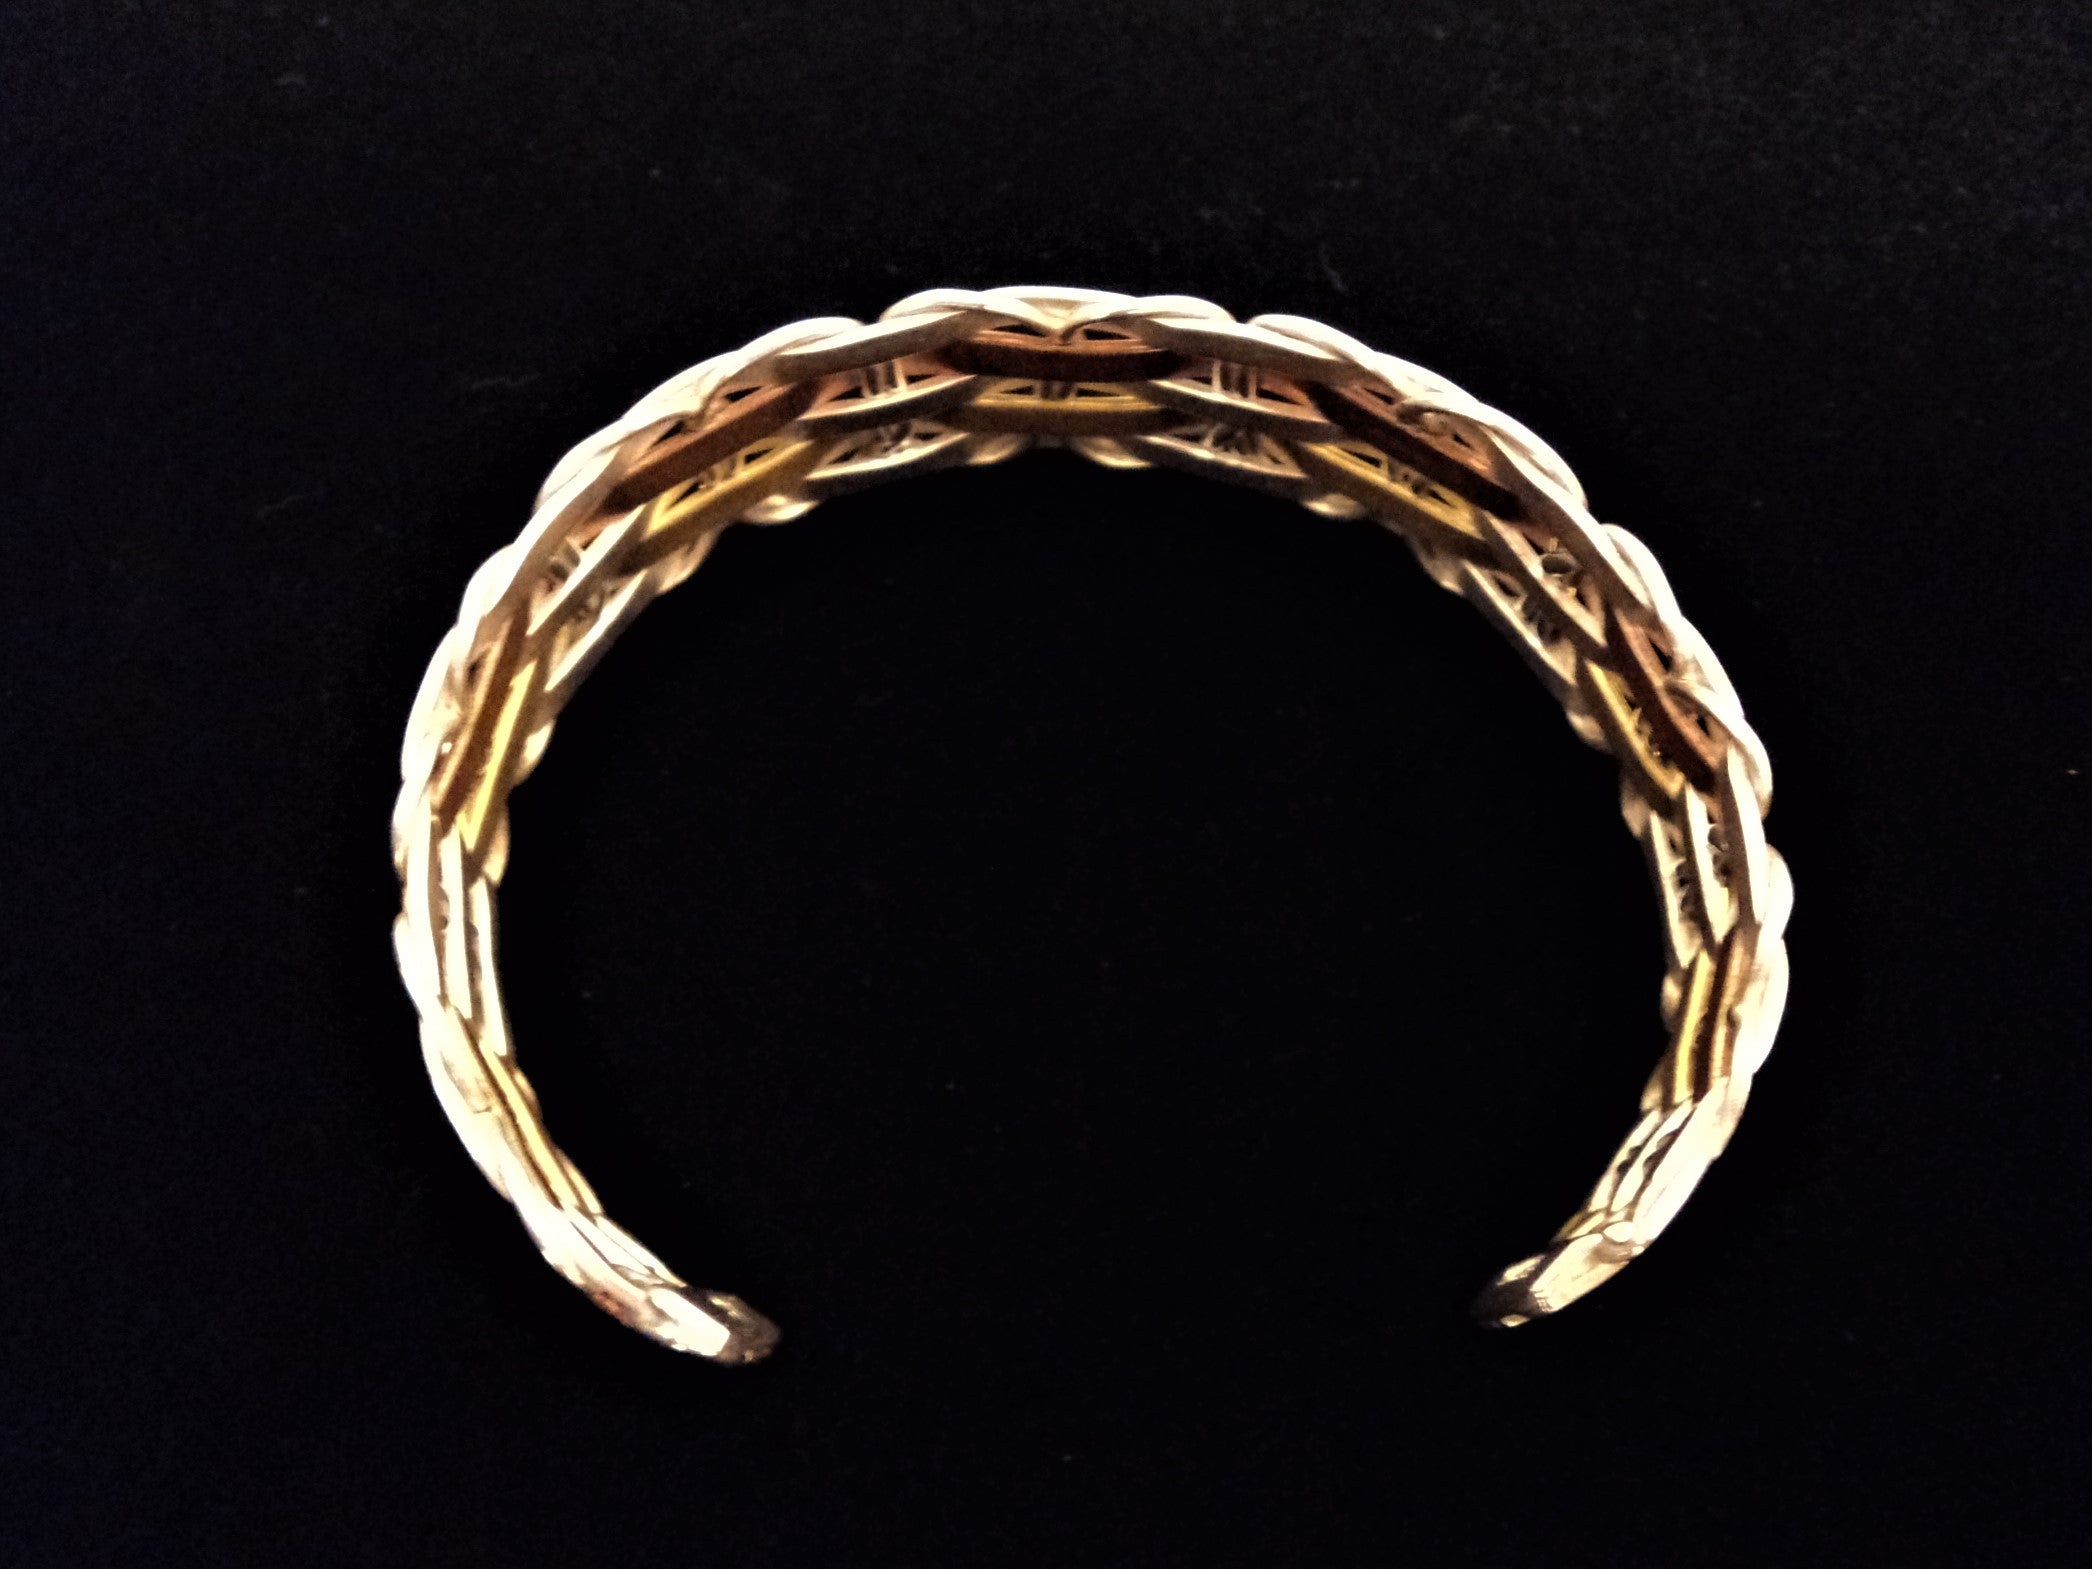 Woven Silver, Copper and Brass Cuff Bracelet